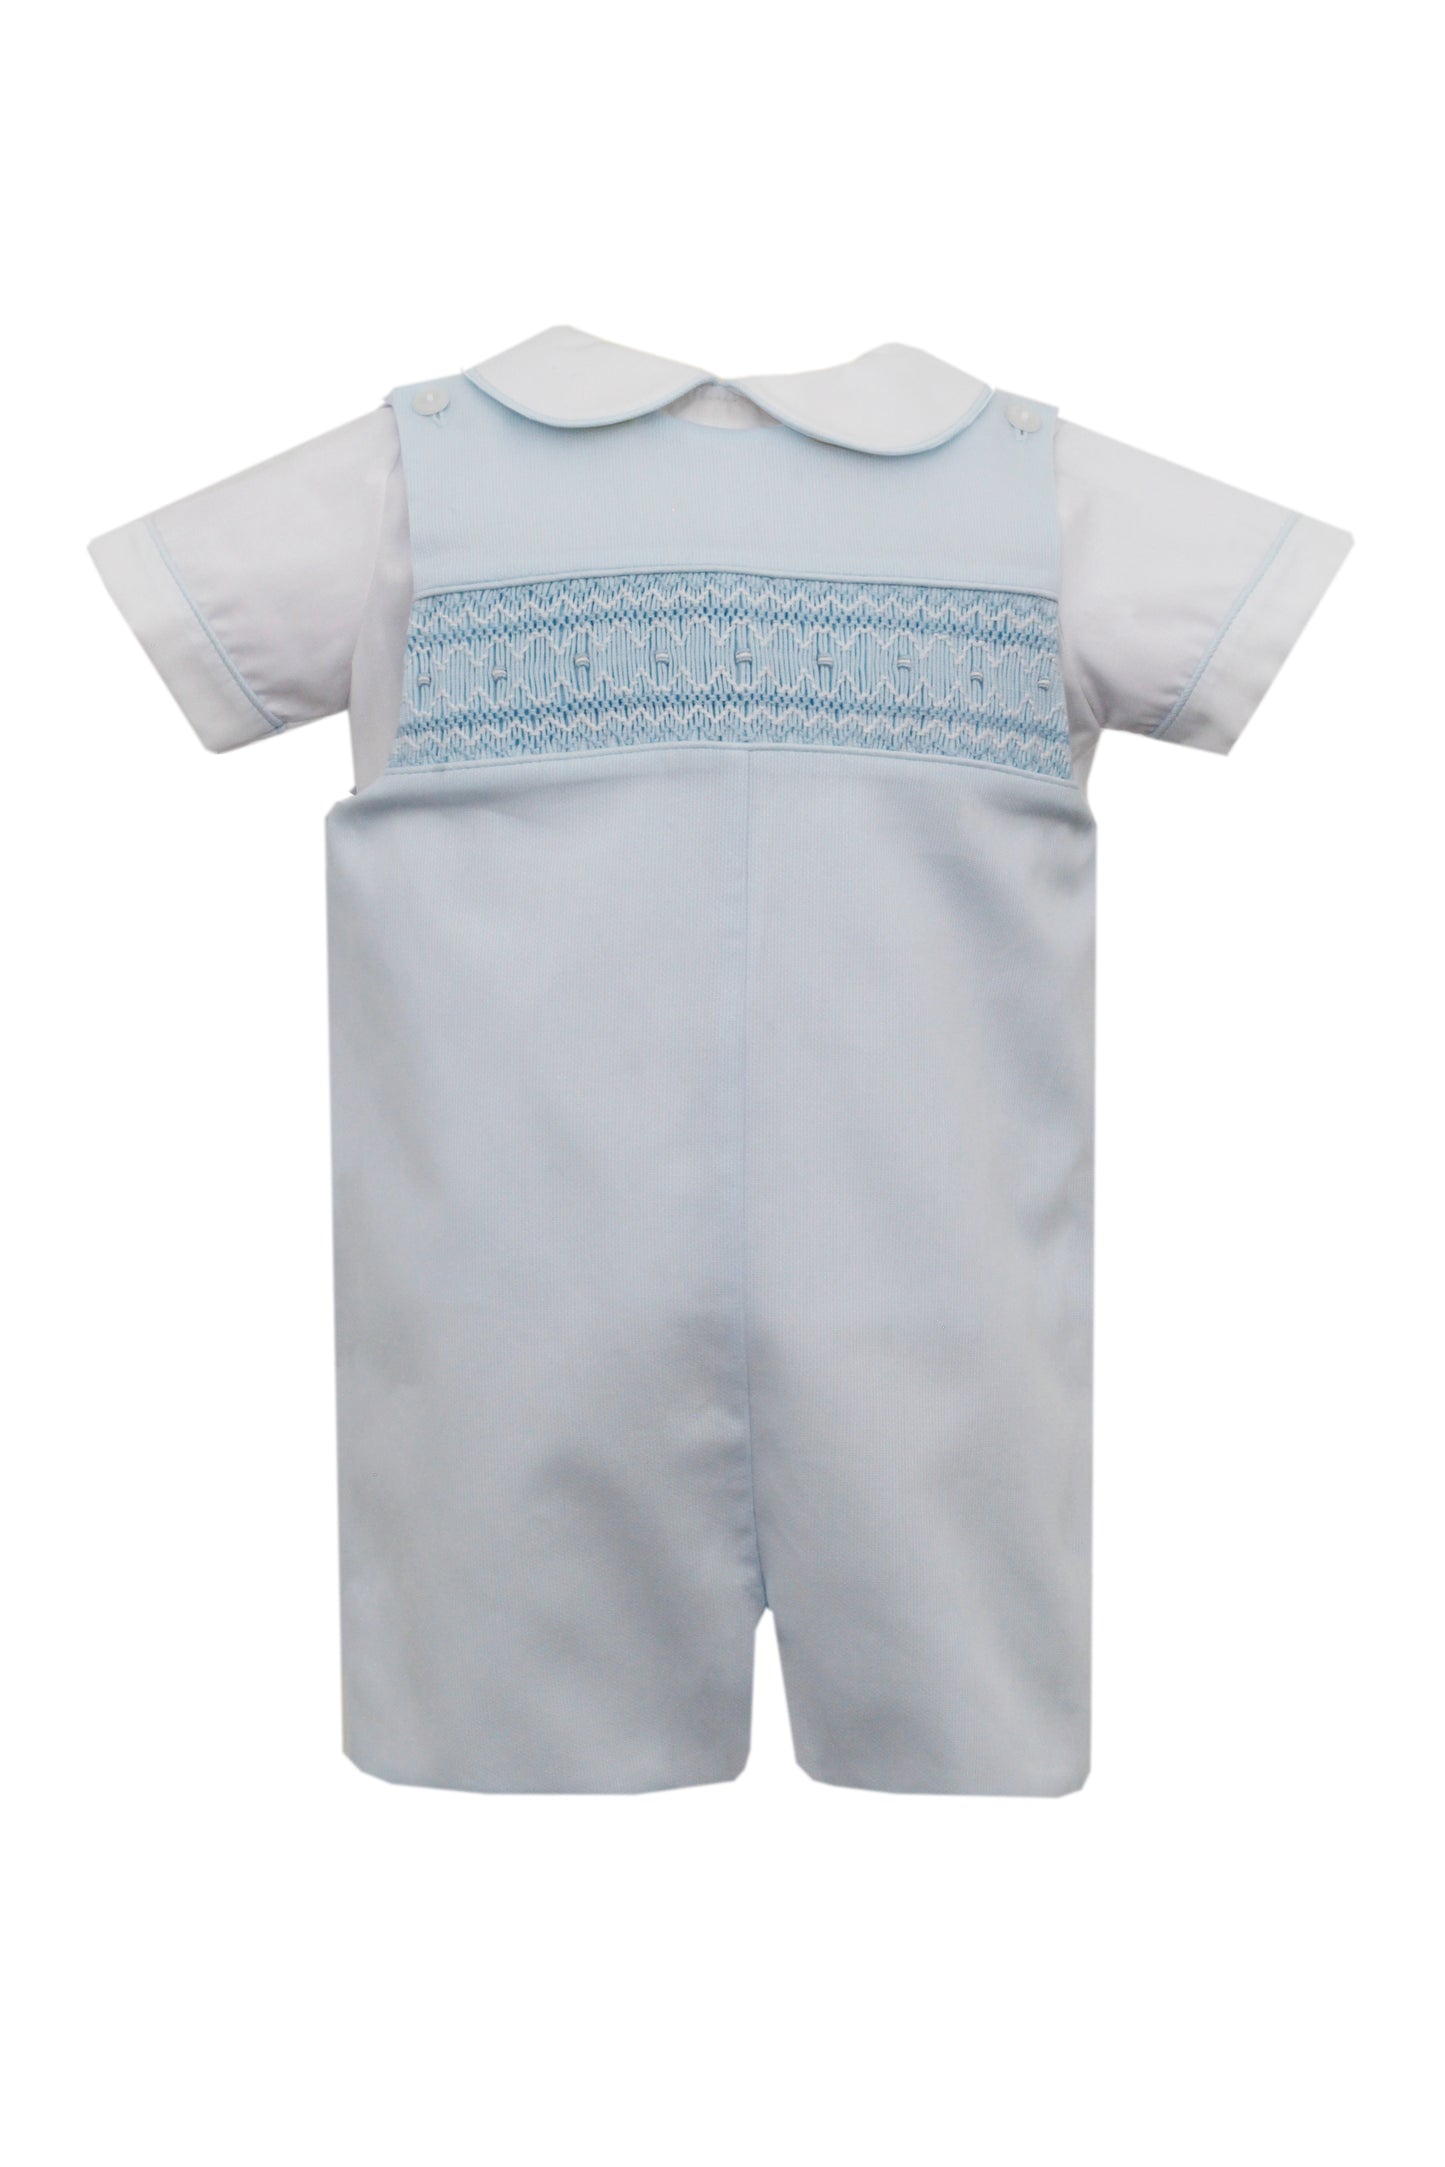 Baby Blue Pique Jon Jon With White Shirt